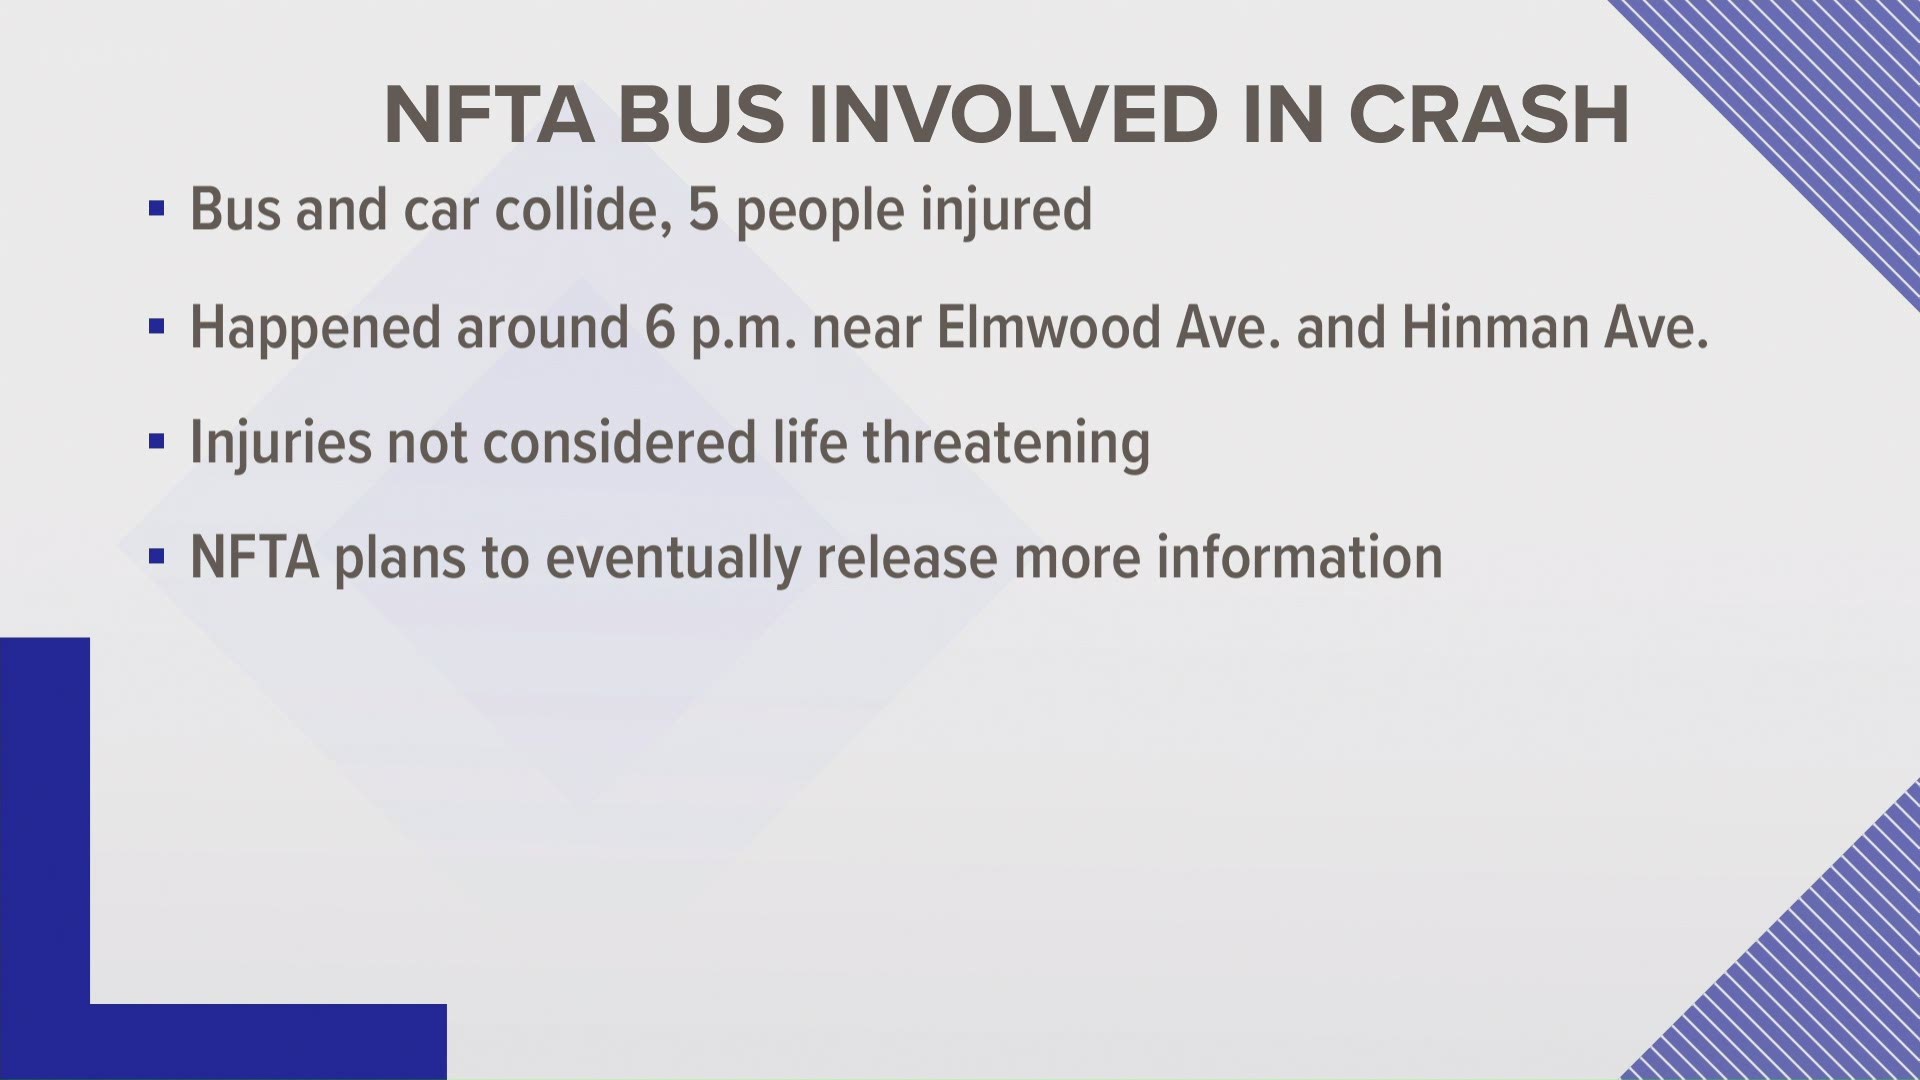 The Niagara Frontier Transportation Authority said the crash happened on Elmwood Avenue, near Hinman Avenue.